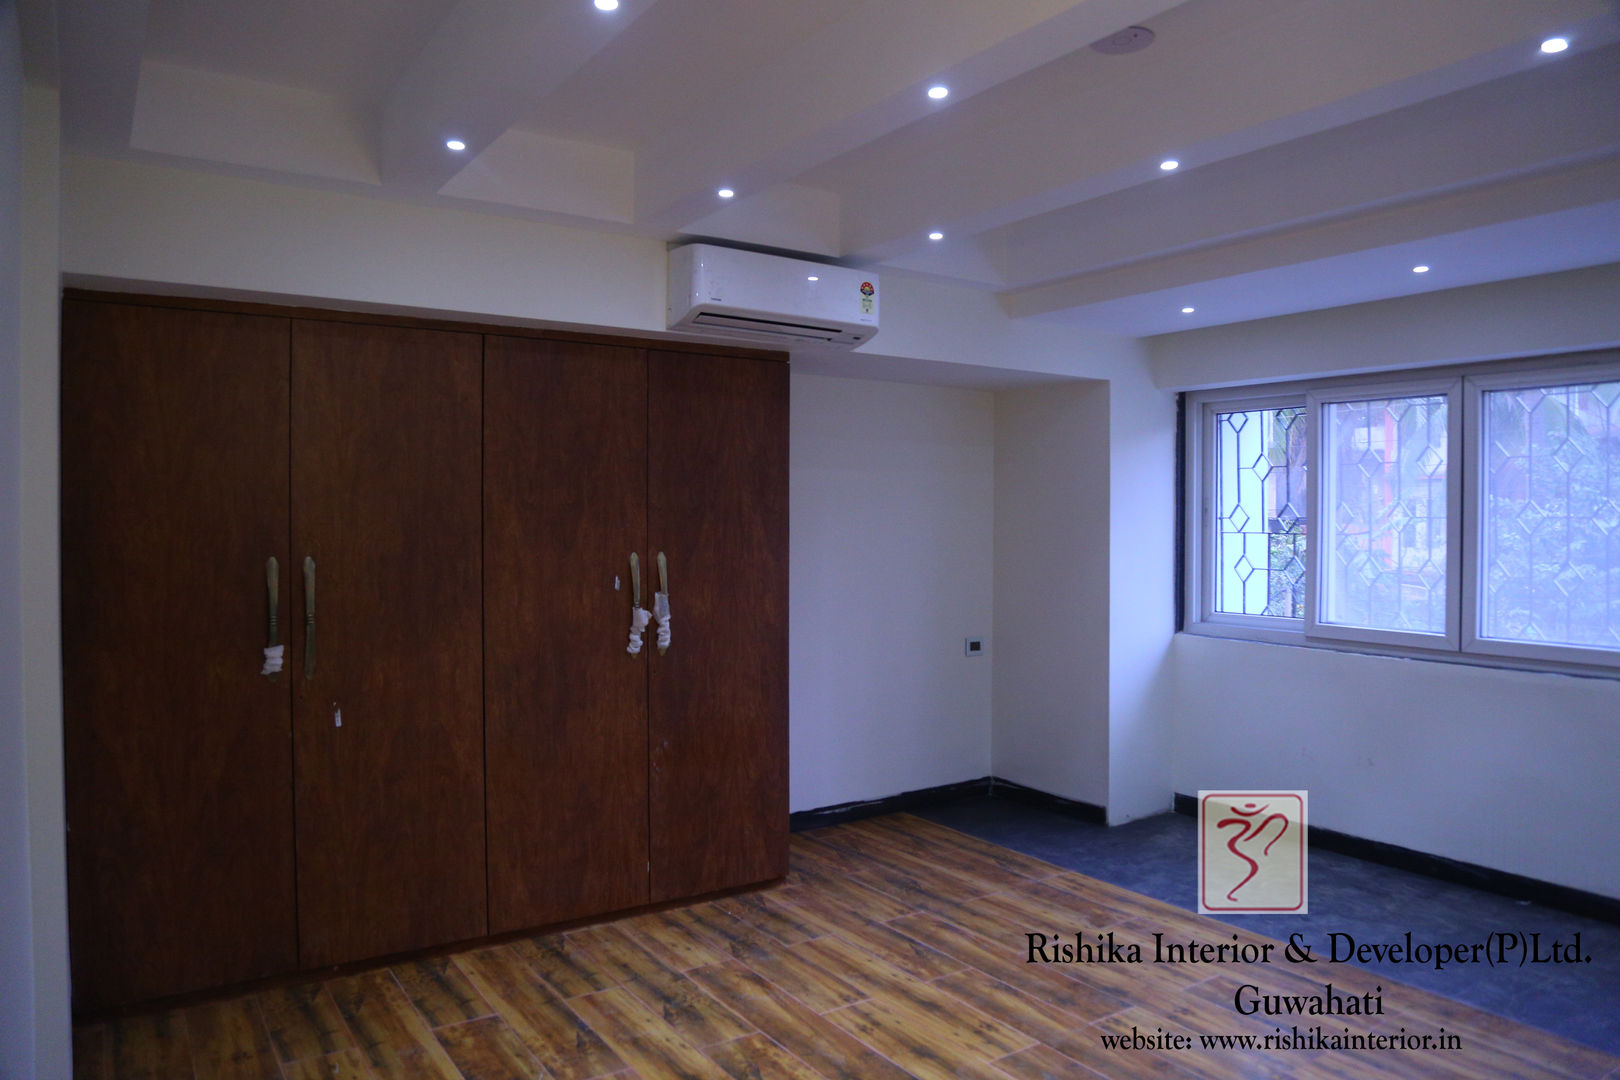 Residence at Silphukhuri, Rishika Interior & Developer (p) Ltd. Rishika Interior & Developer (p) Ltd. Dormitorios modernos: Ideas, imágenes y decoración